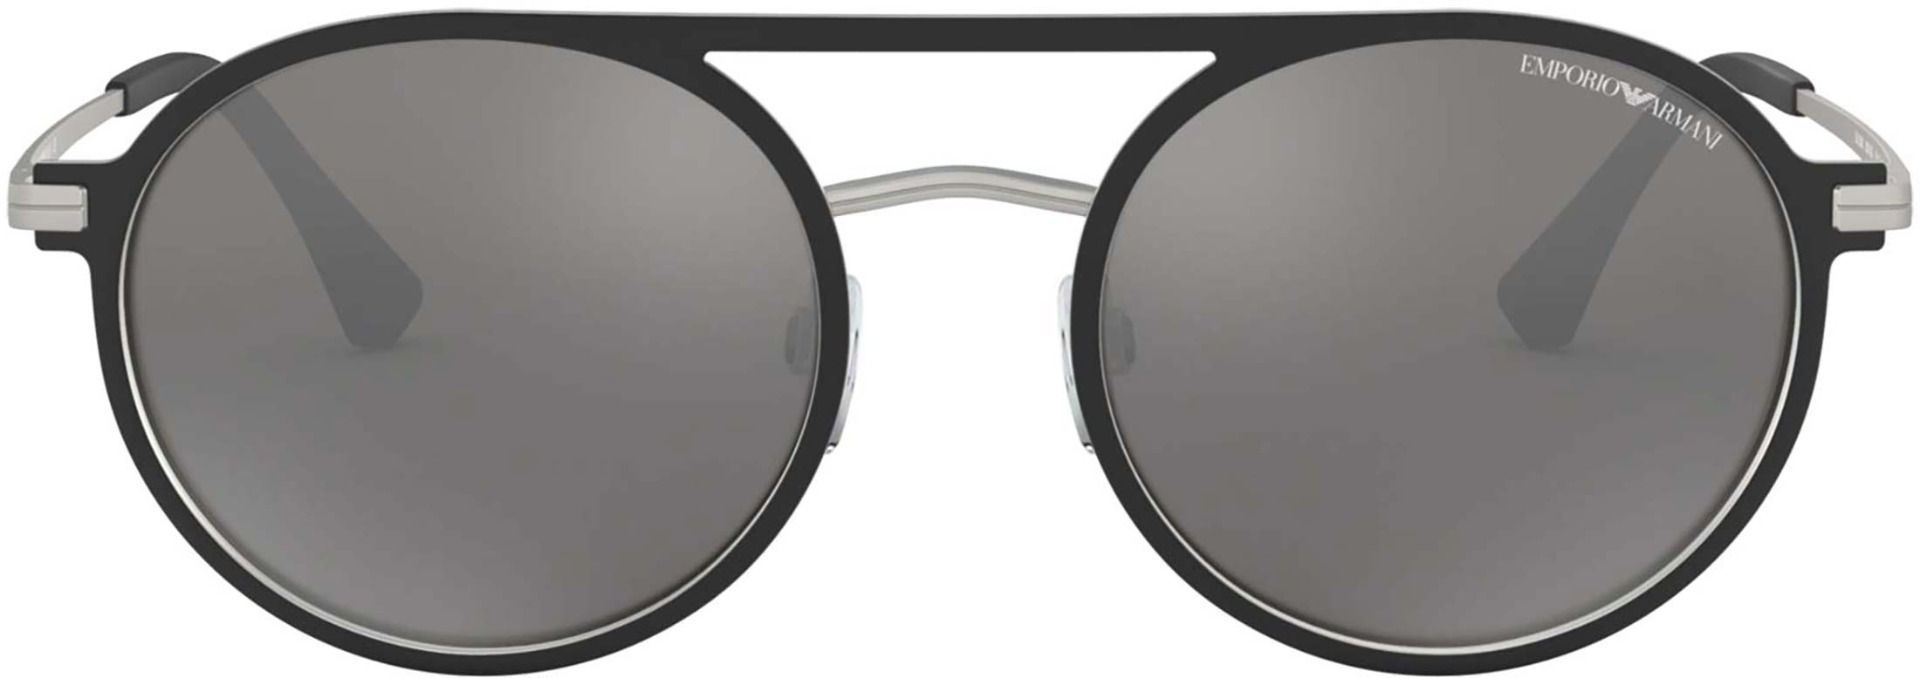 Armani ea2080 30016g solbriller | Extra